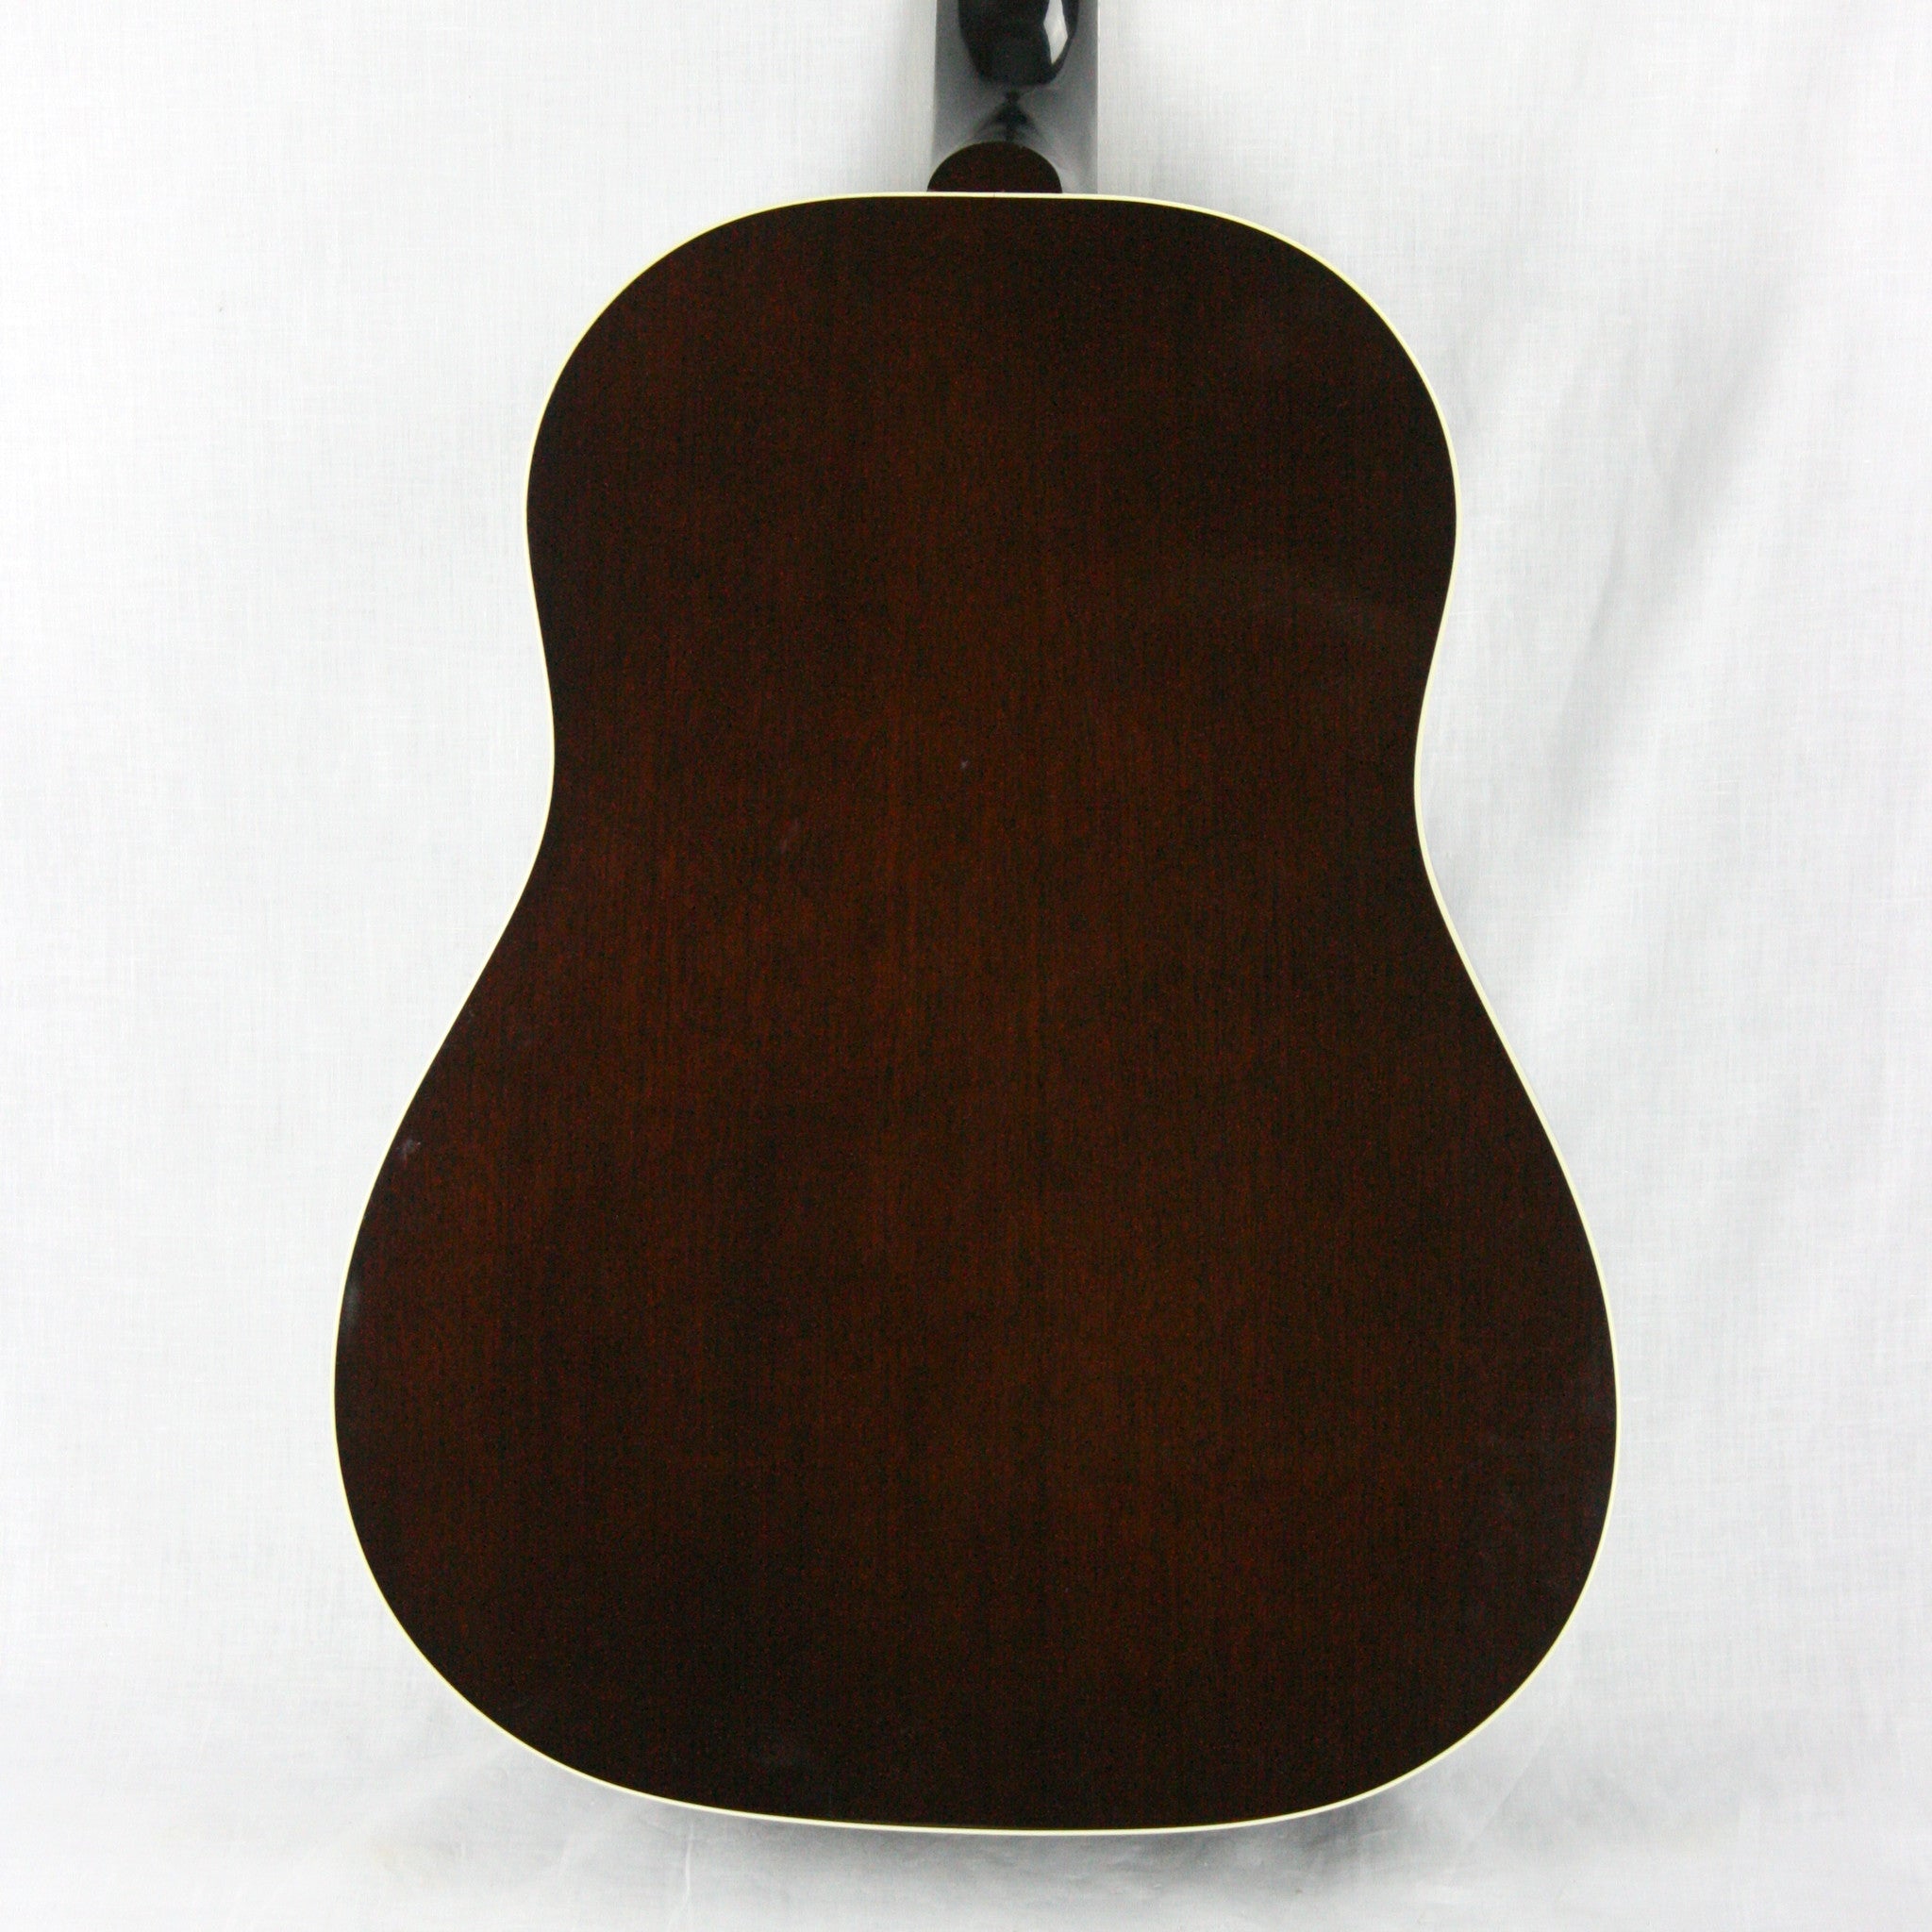 *SOLD*  1999 Gibson J-160E Acoustic Electric Guitar Sunburst w/ case! John Lennon Beatles, plays/sounds great!